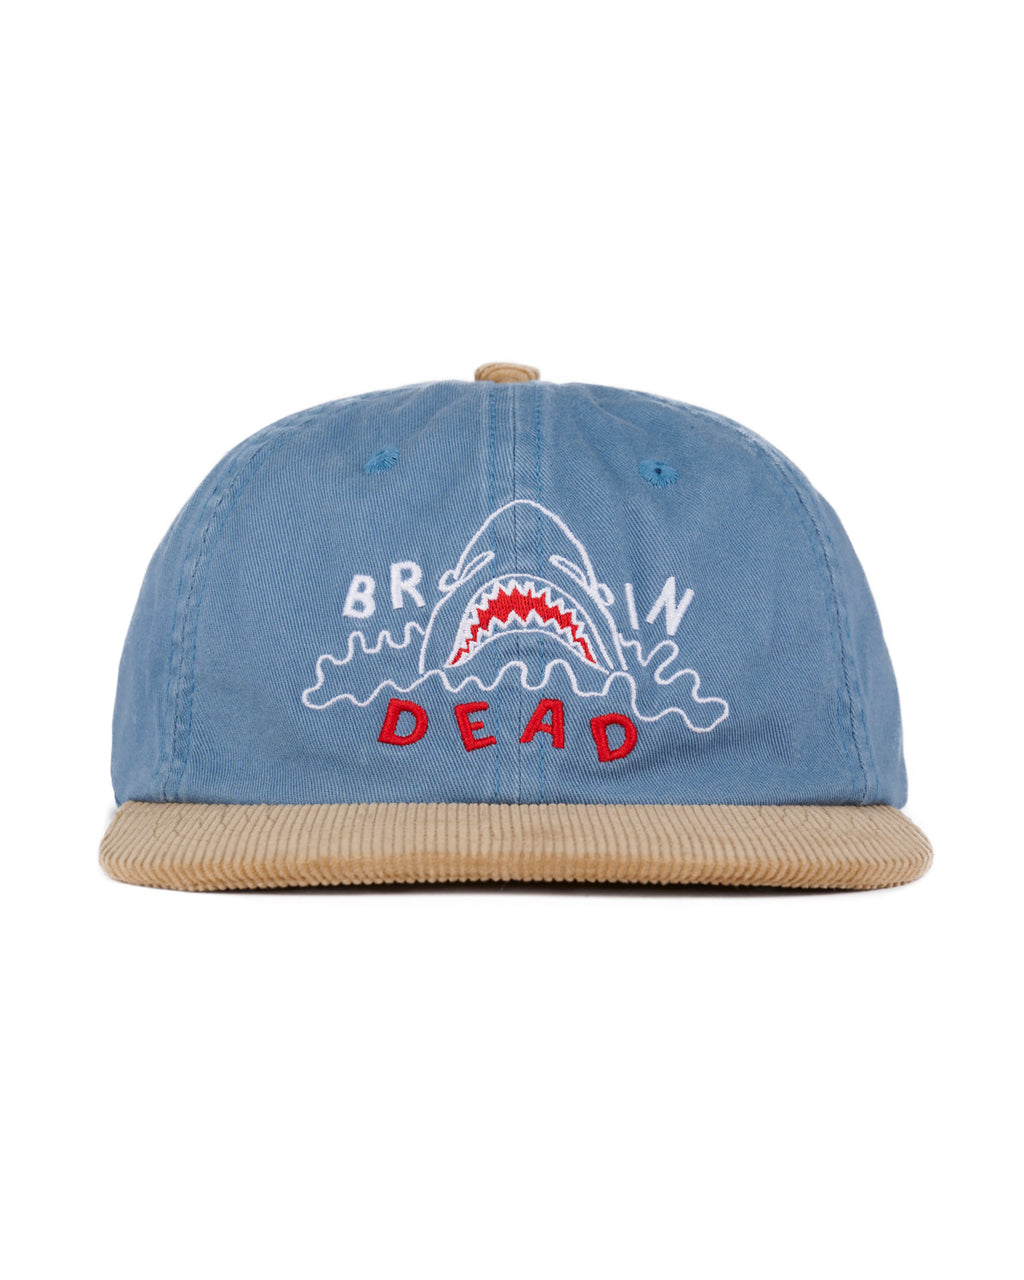 Shark Attack 6 Panel Hat - Blue/Khaki